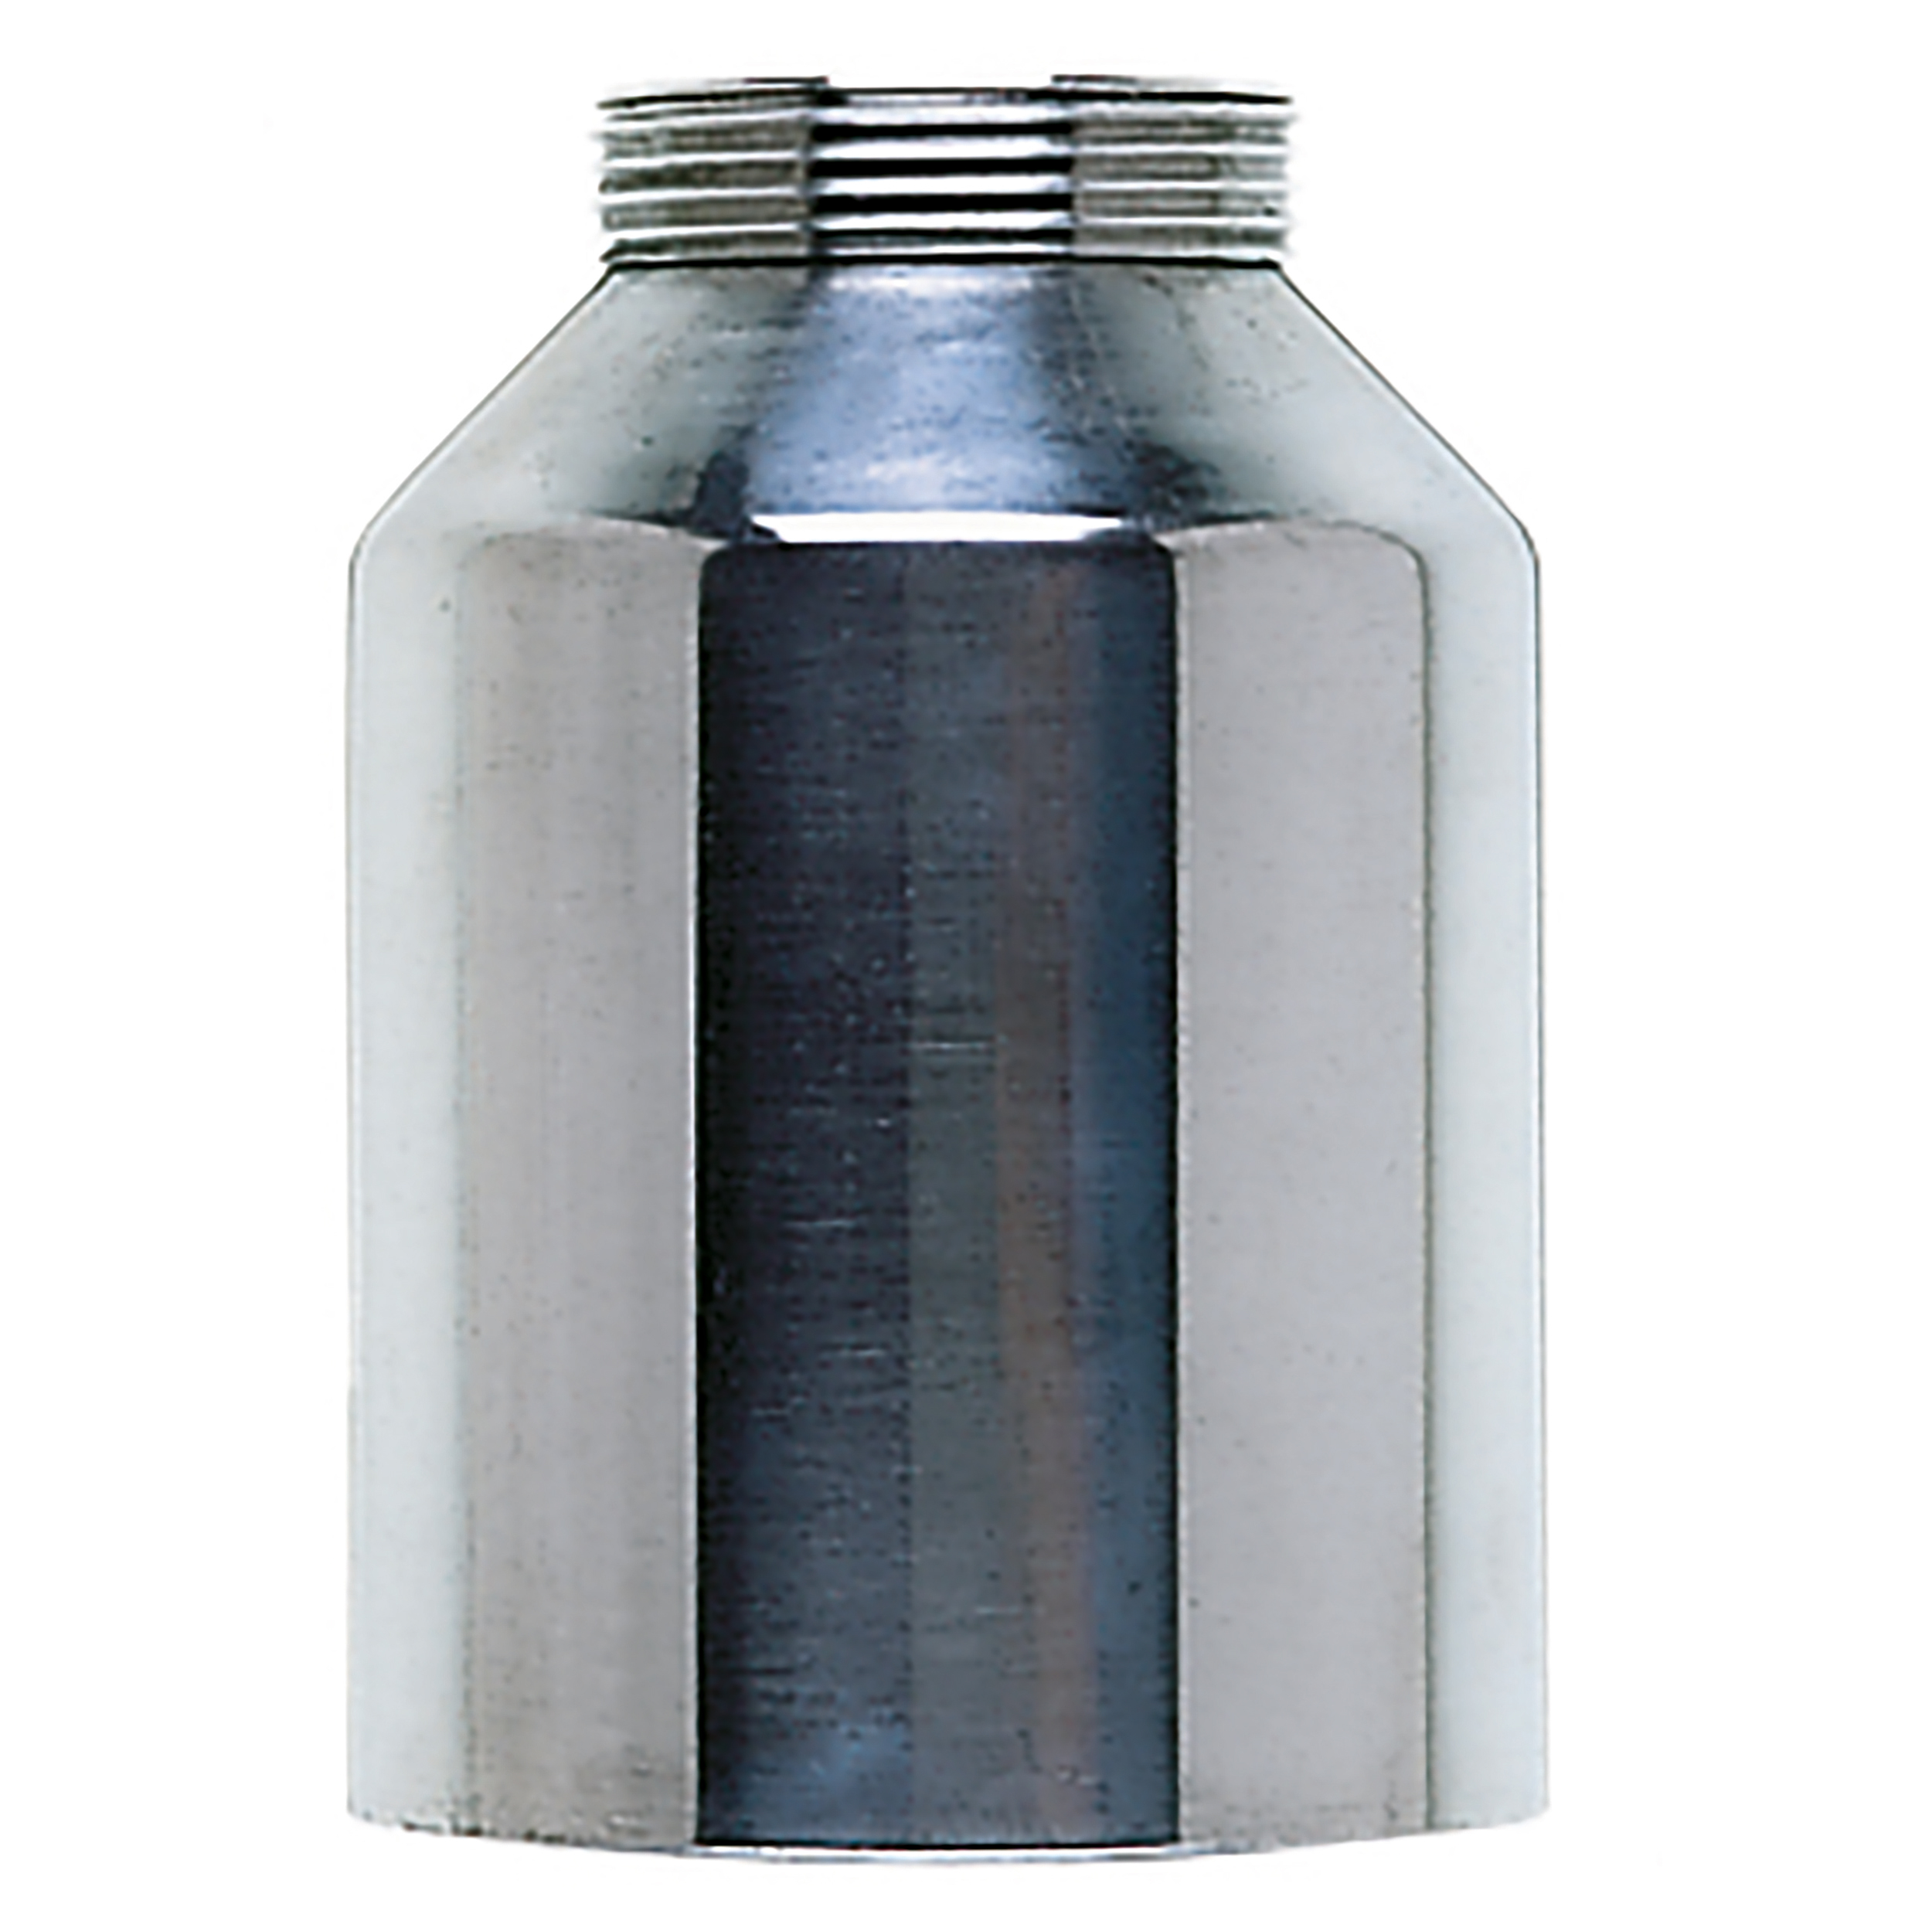 Metallbehälter für Sprühpistolen, Füllmenge: 0,7 l, Material: Aluminium